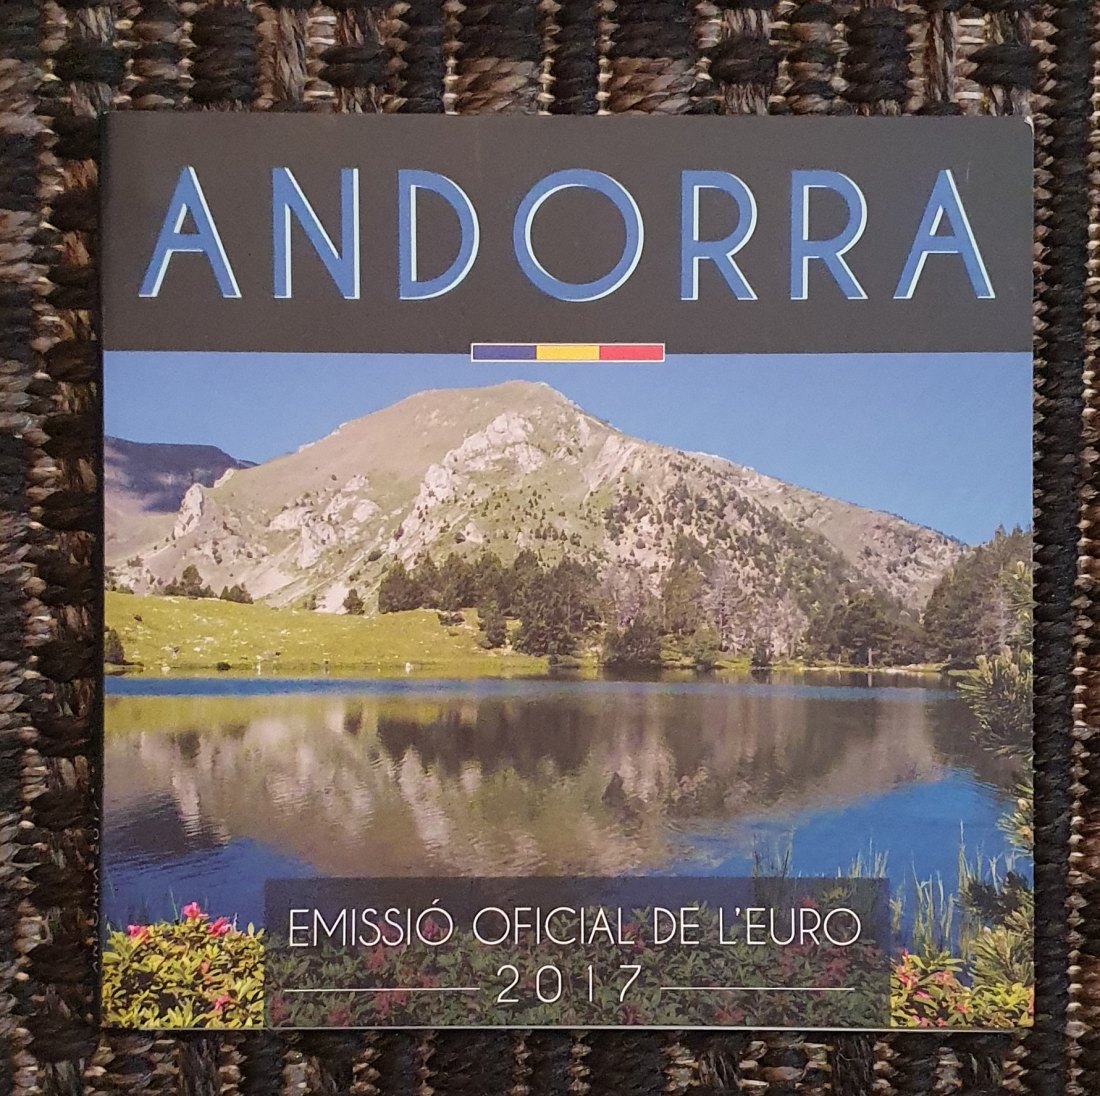  Andorra 2017, originaler KMS von 1 Cent - 2 € im Originalfolder - KMS-Nr. 09.015   